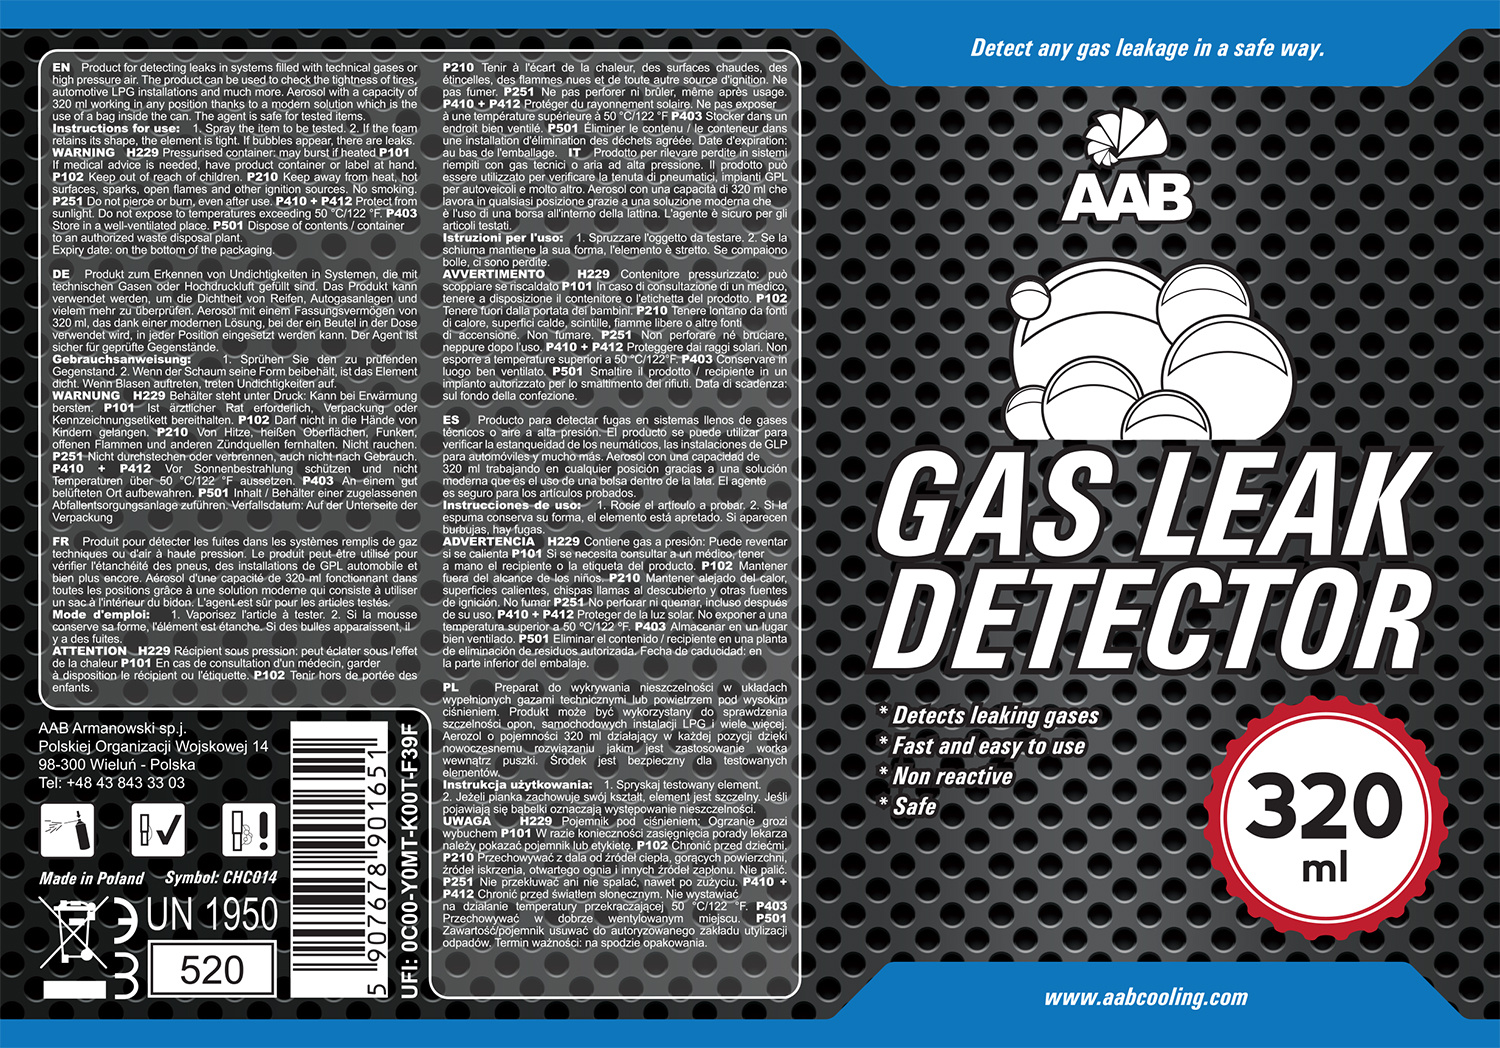 AAB GAS LEAK DETECTOR 320 ml